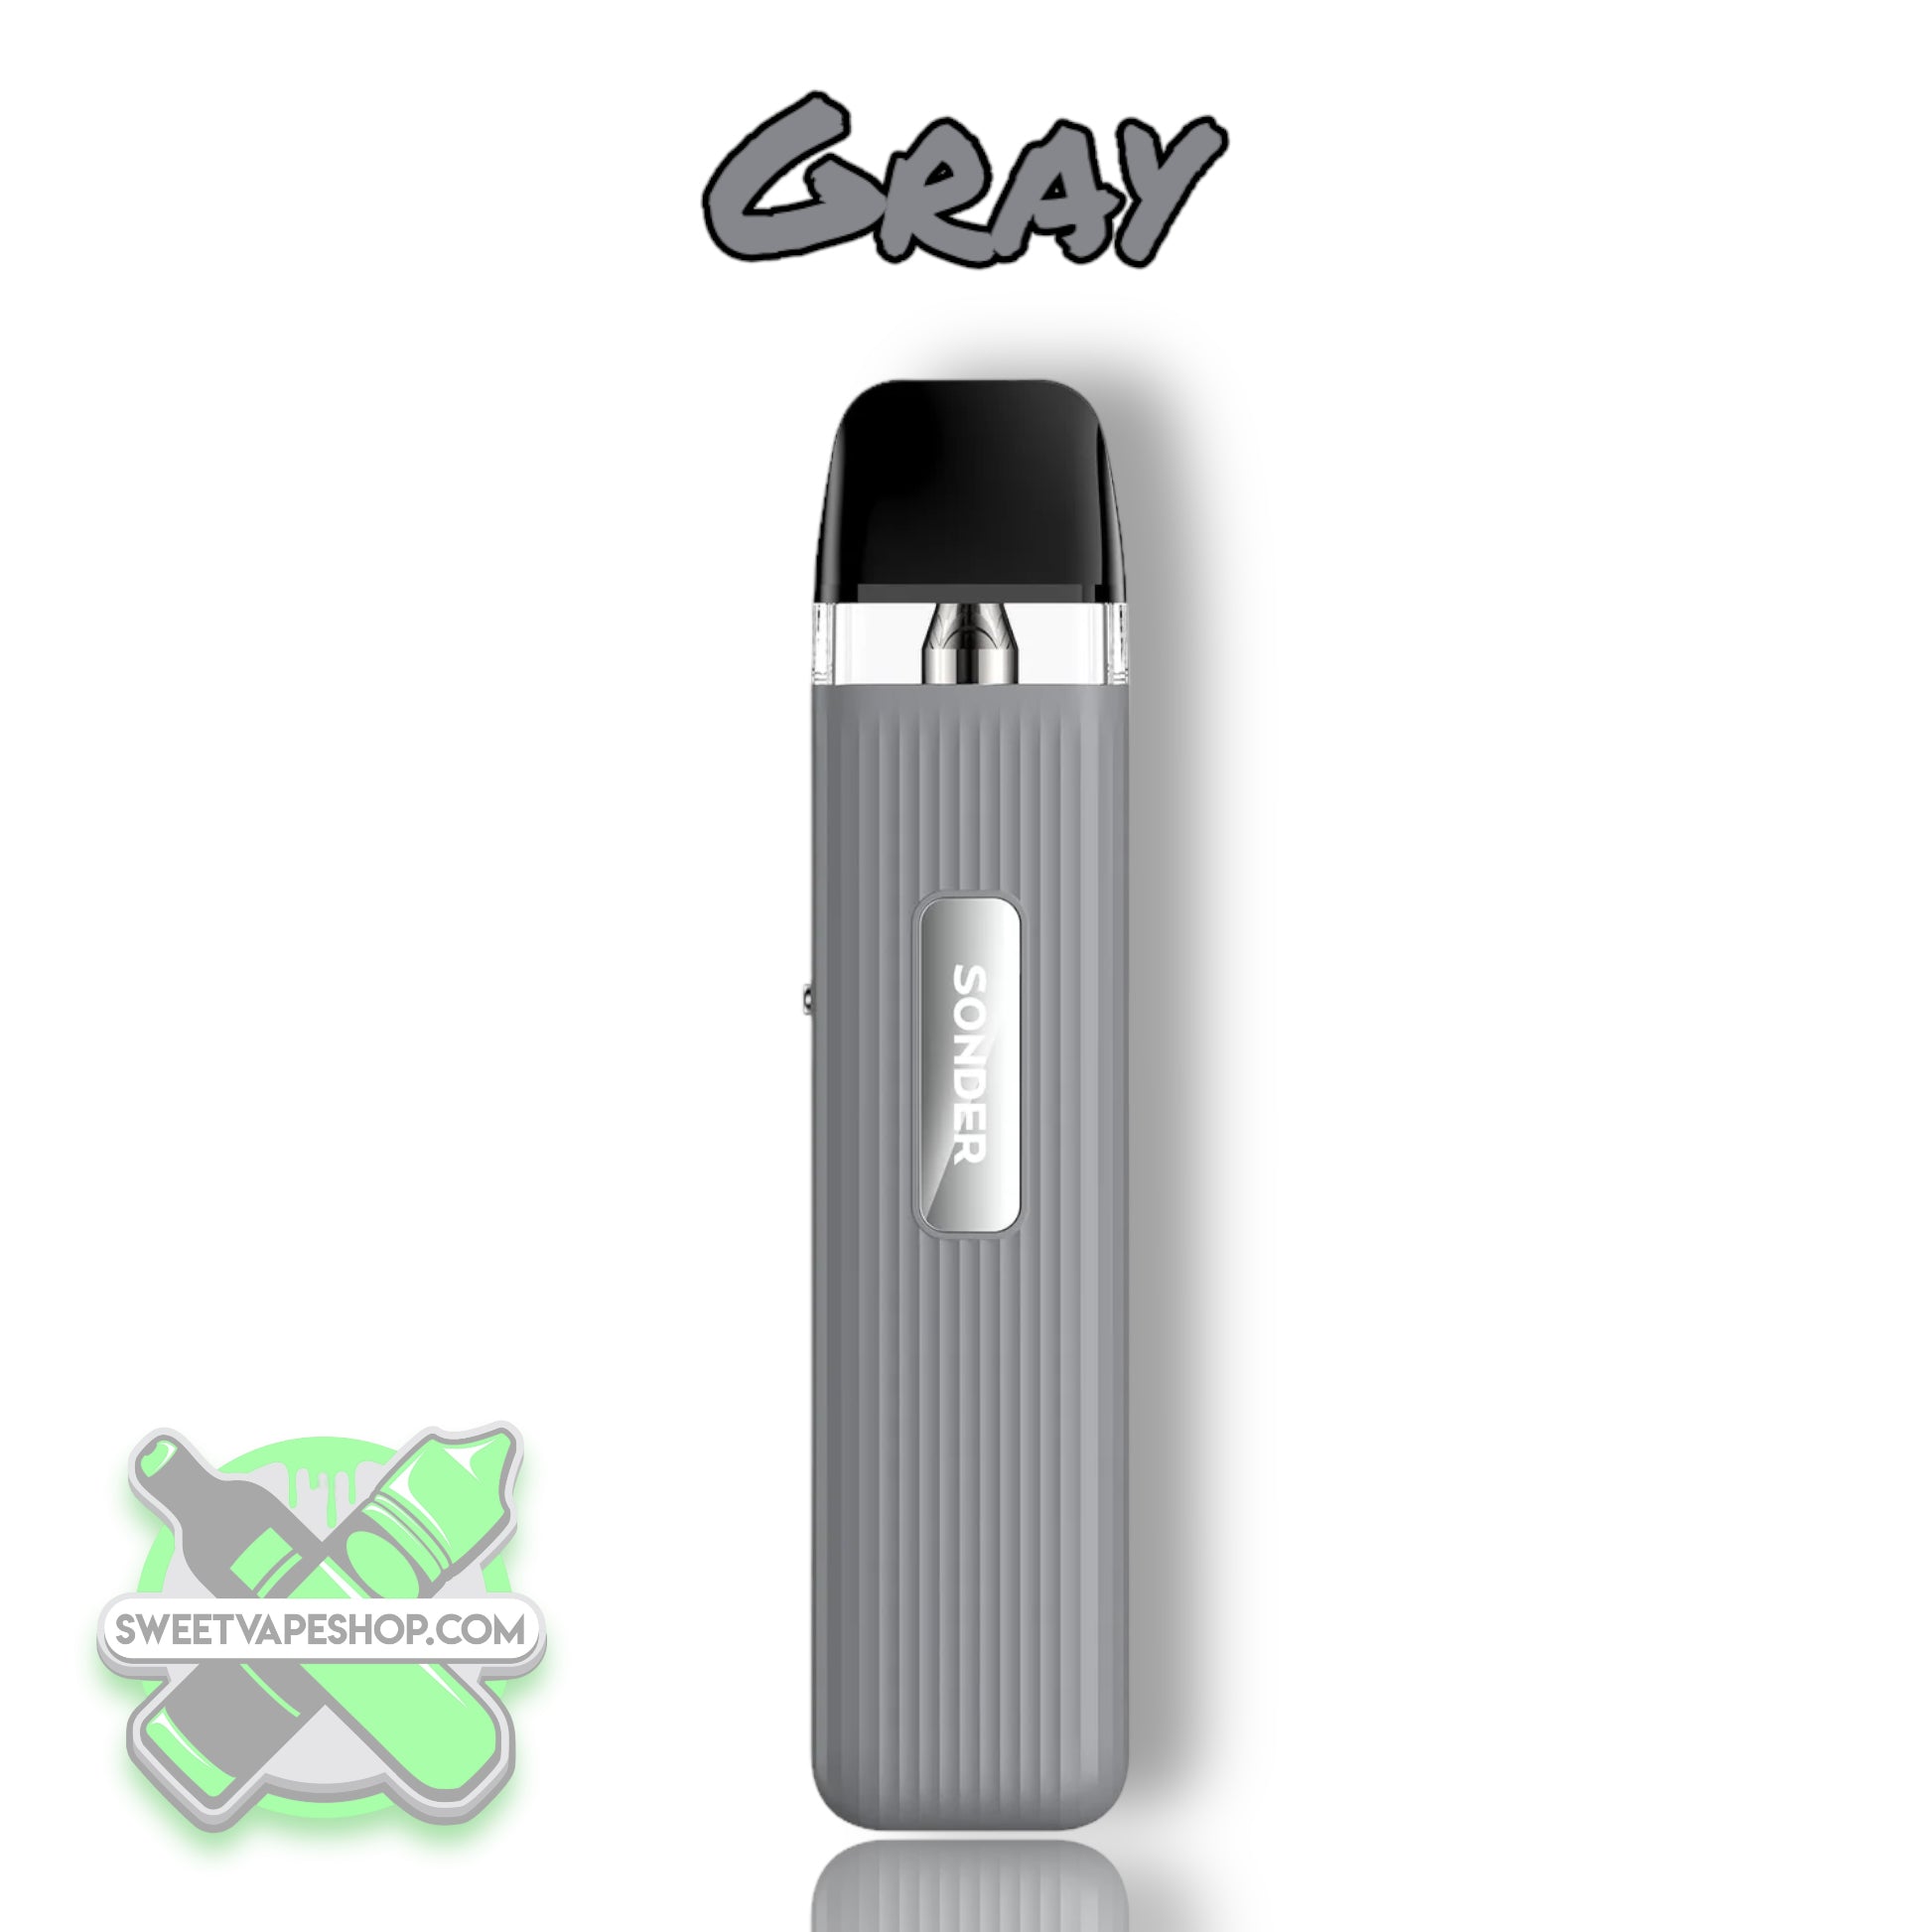 GeekVape Sonder Q E-Zigaretten Set, Rot, 1er Packung